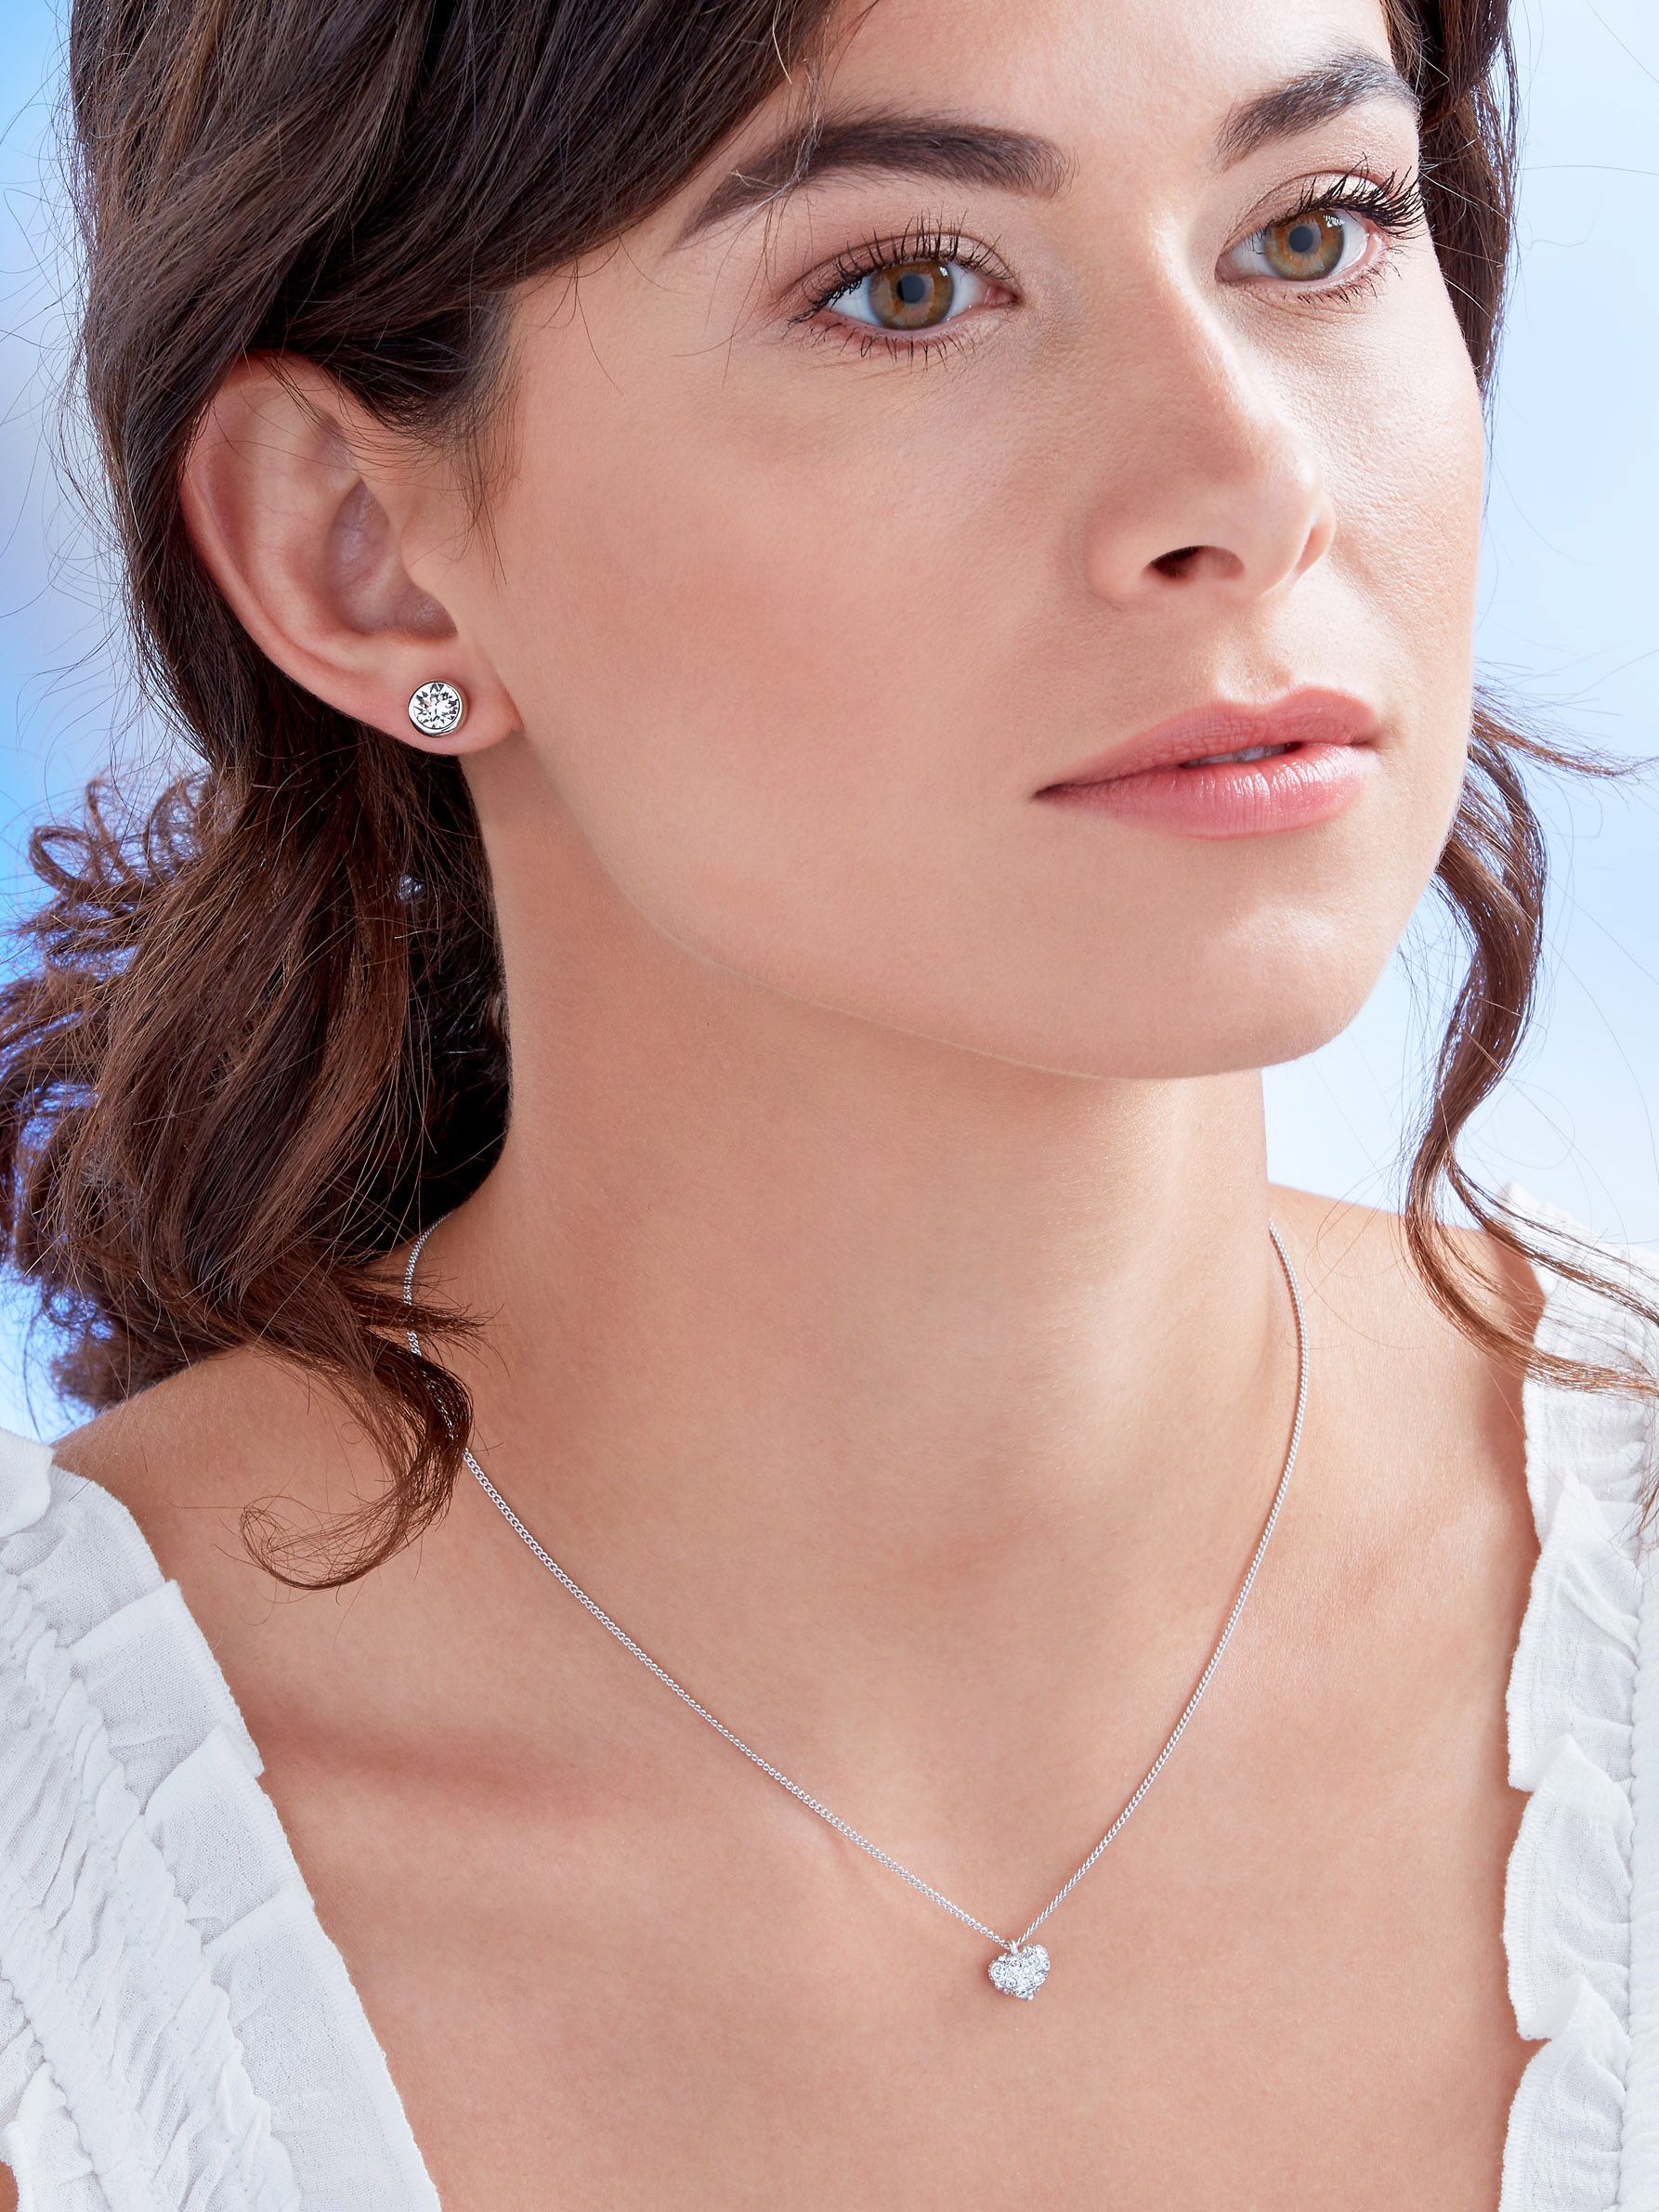 Buy Melissa Odabash Crystal Round Stud Earrings Online at johnlewis.com